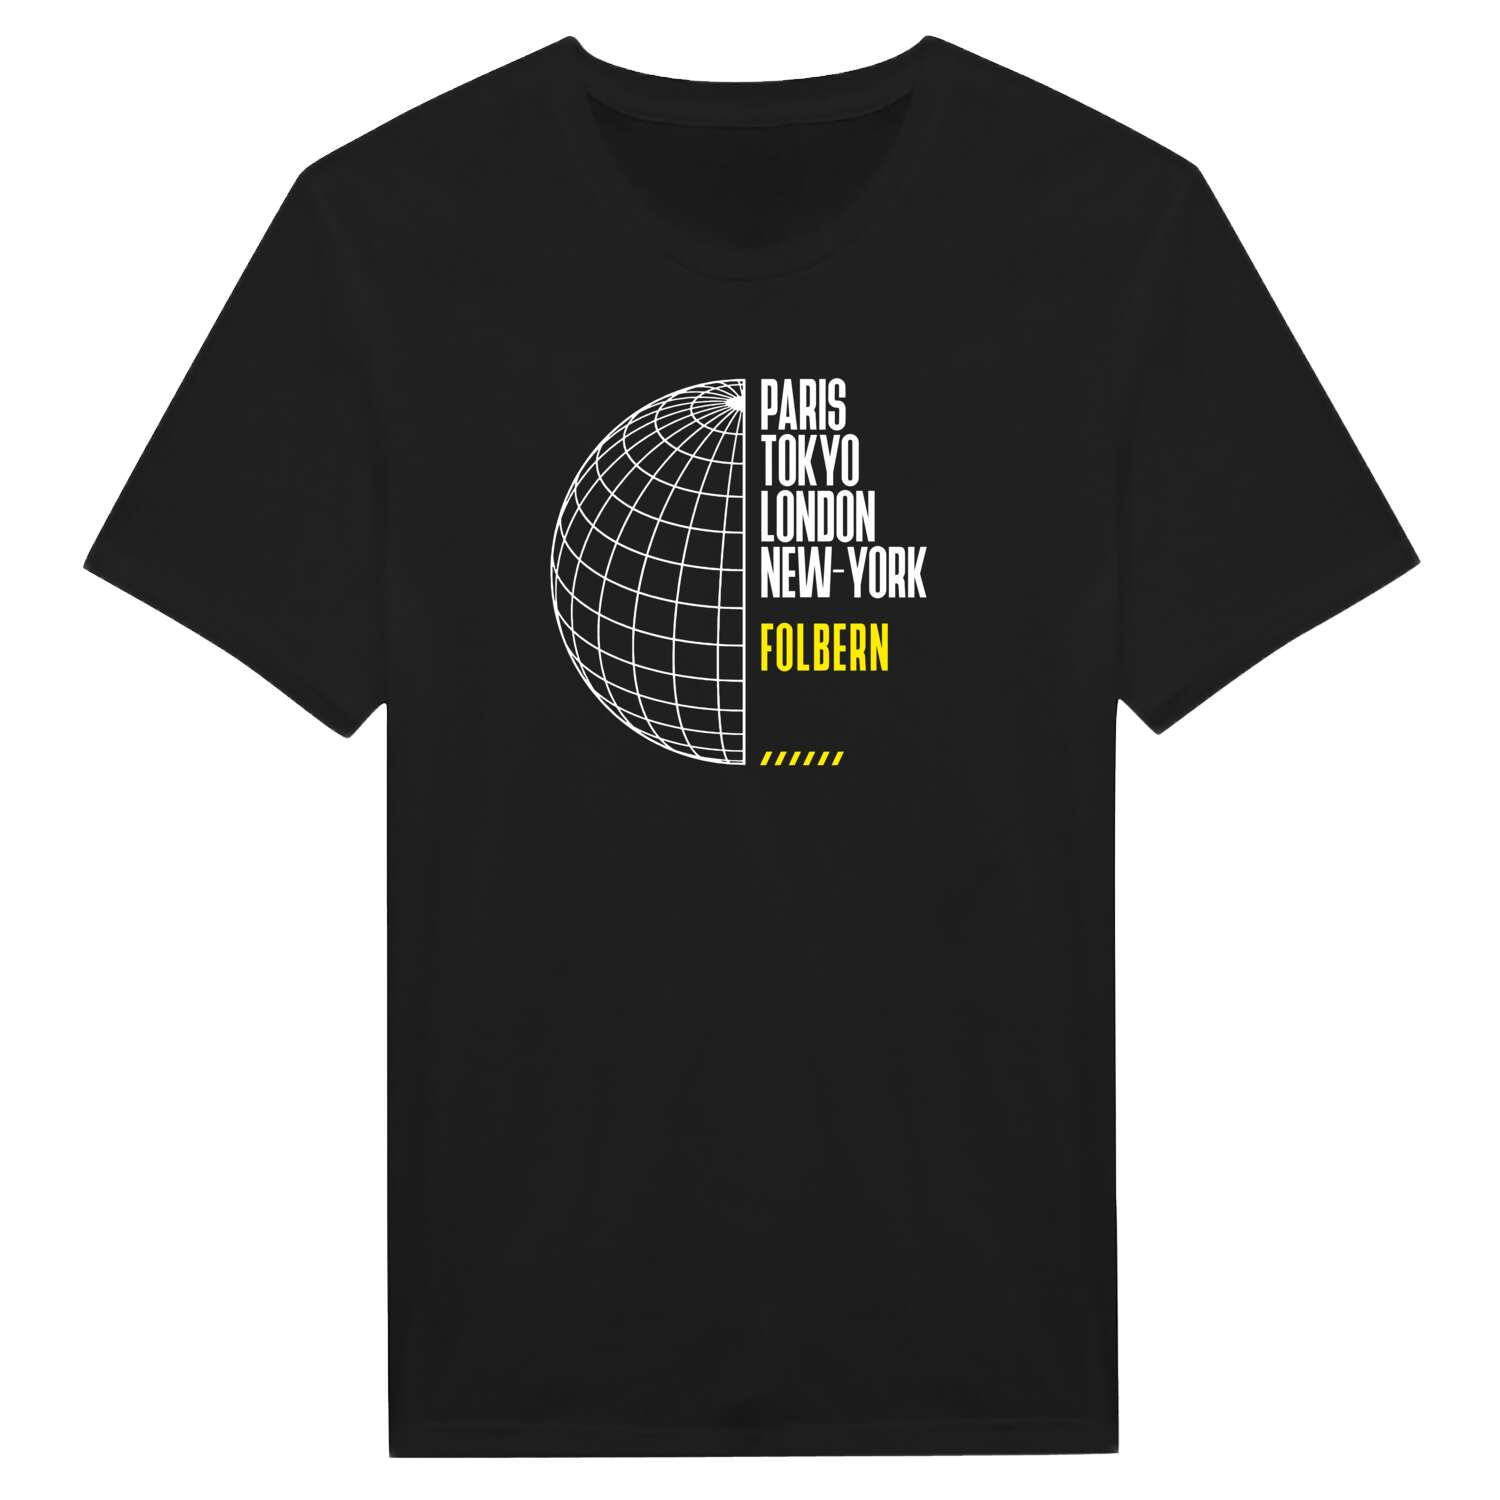 Folbern T-Shirt »Paris Tokyo London«